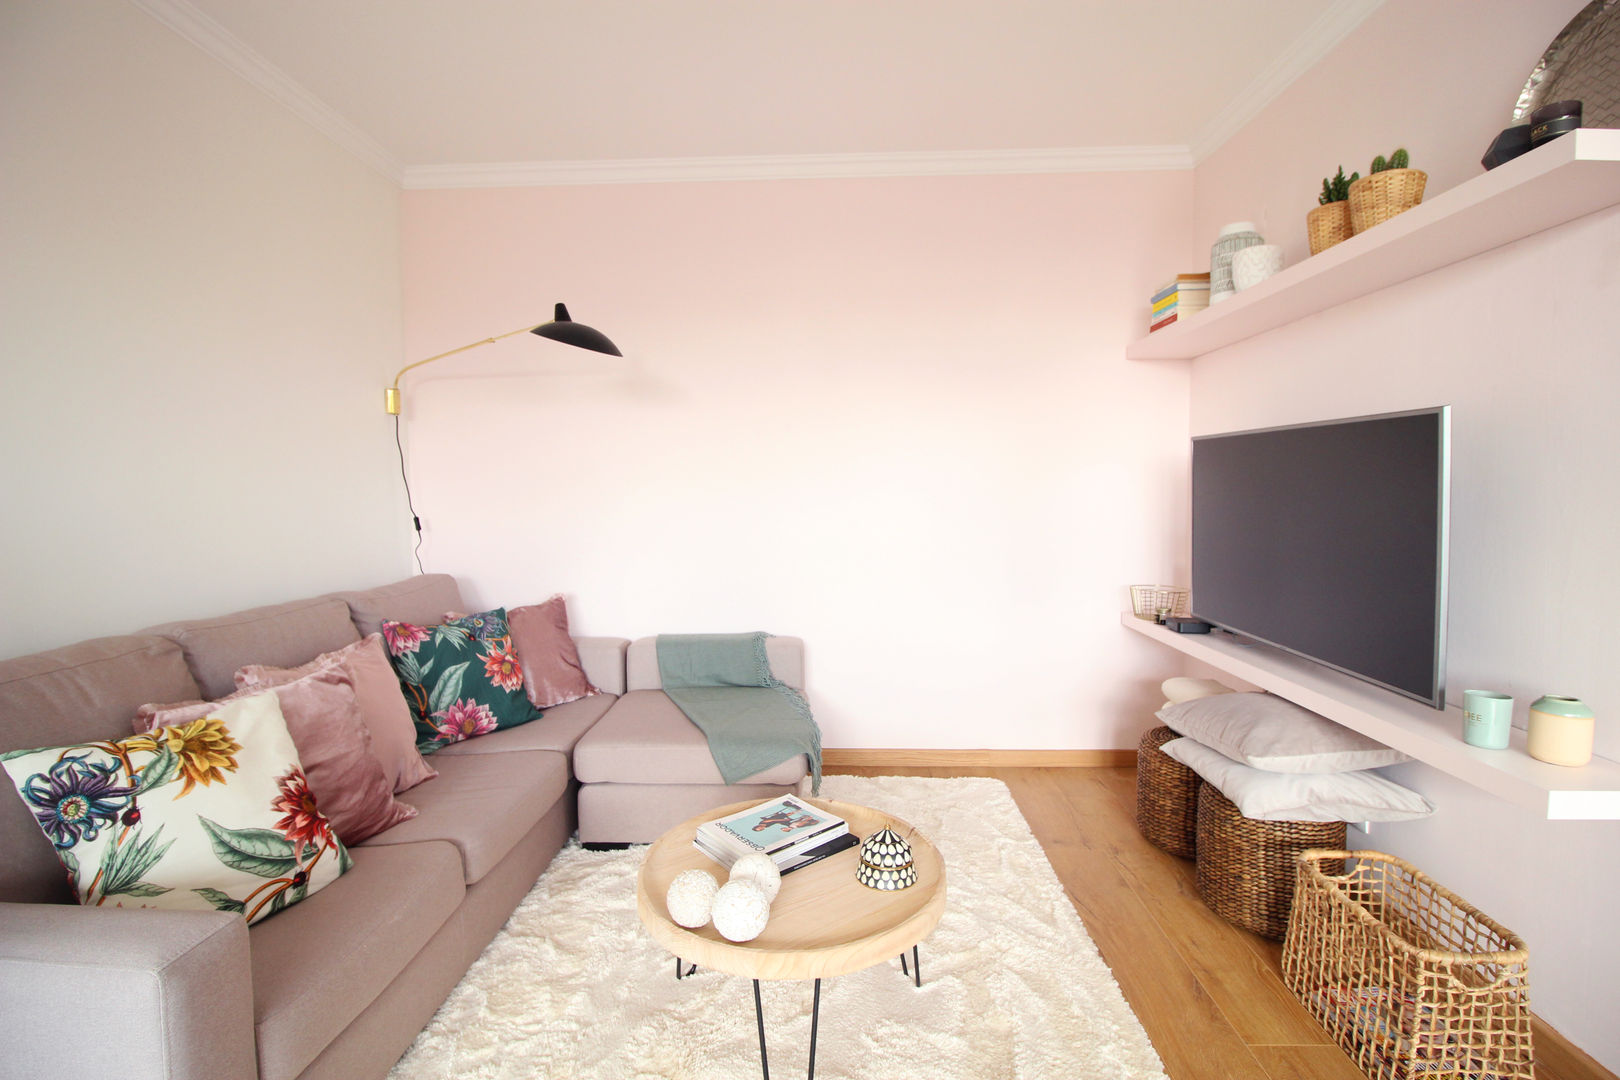 Sala de estar Rima Design Salas de jantar escandinavas sala de estar,decoração sala,sala rosa,wood flooring